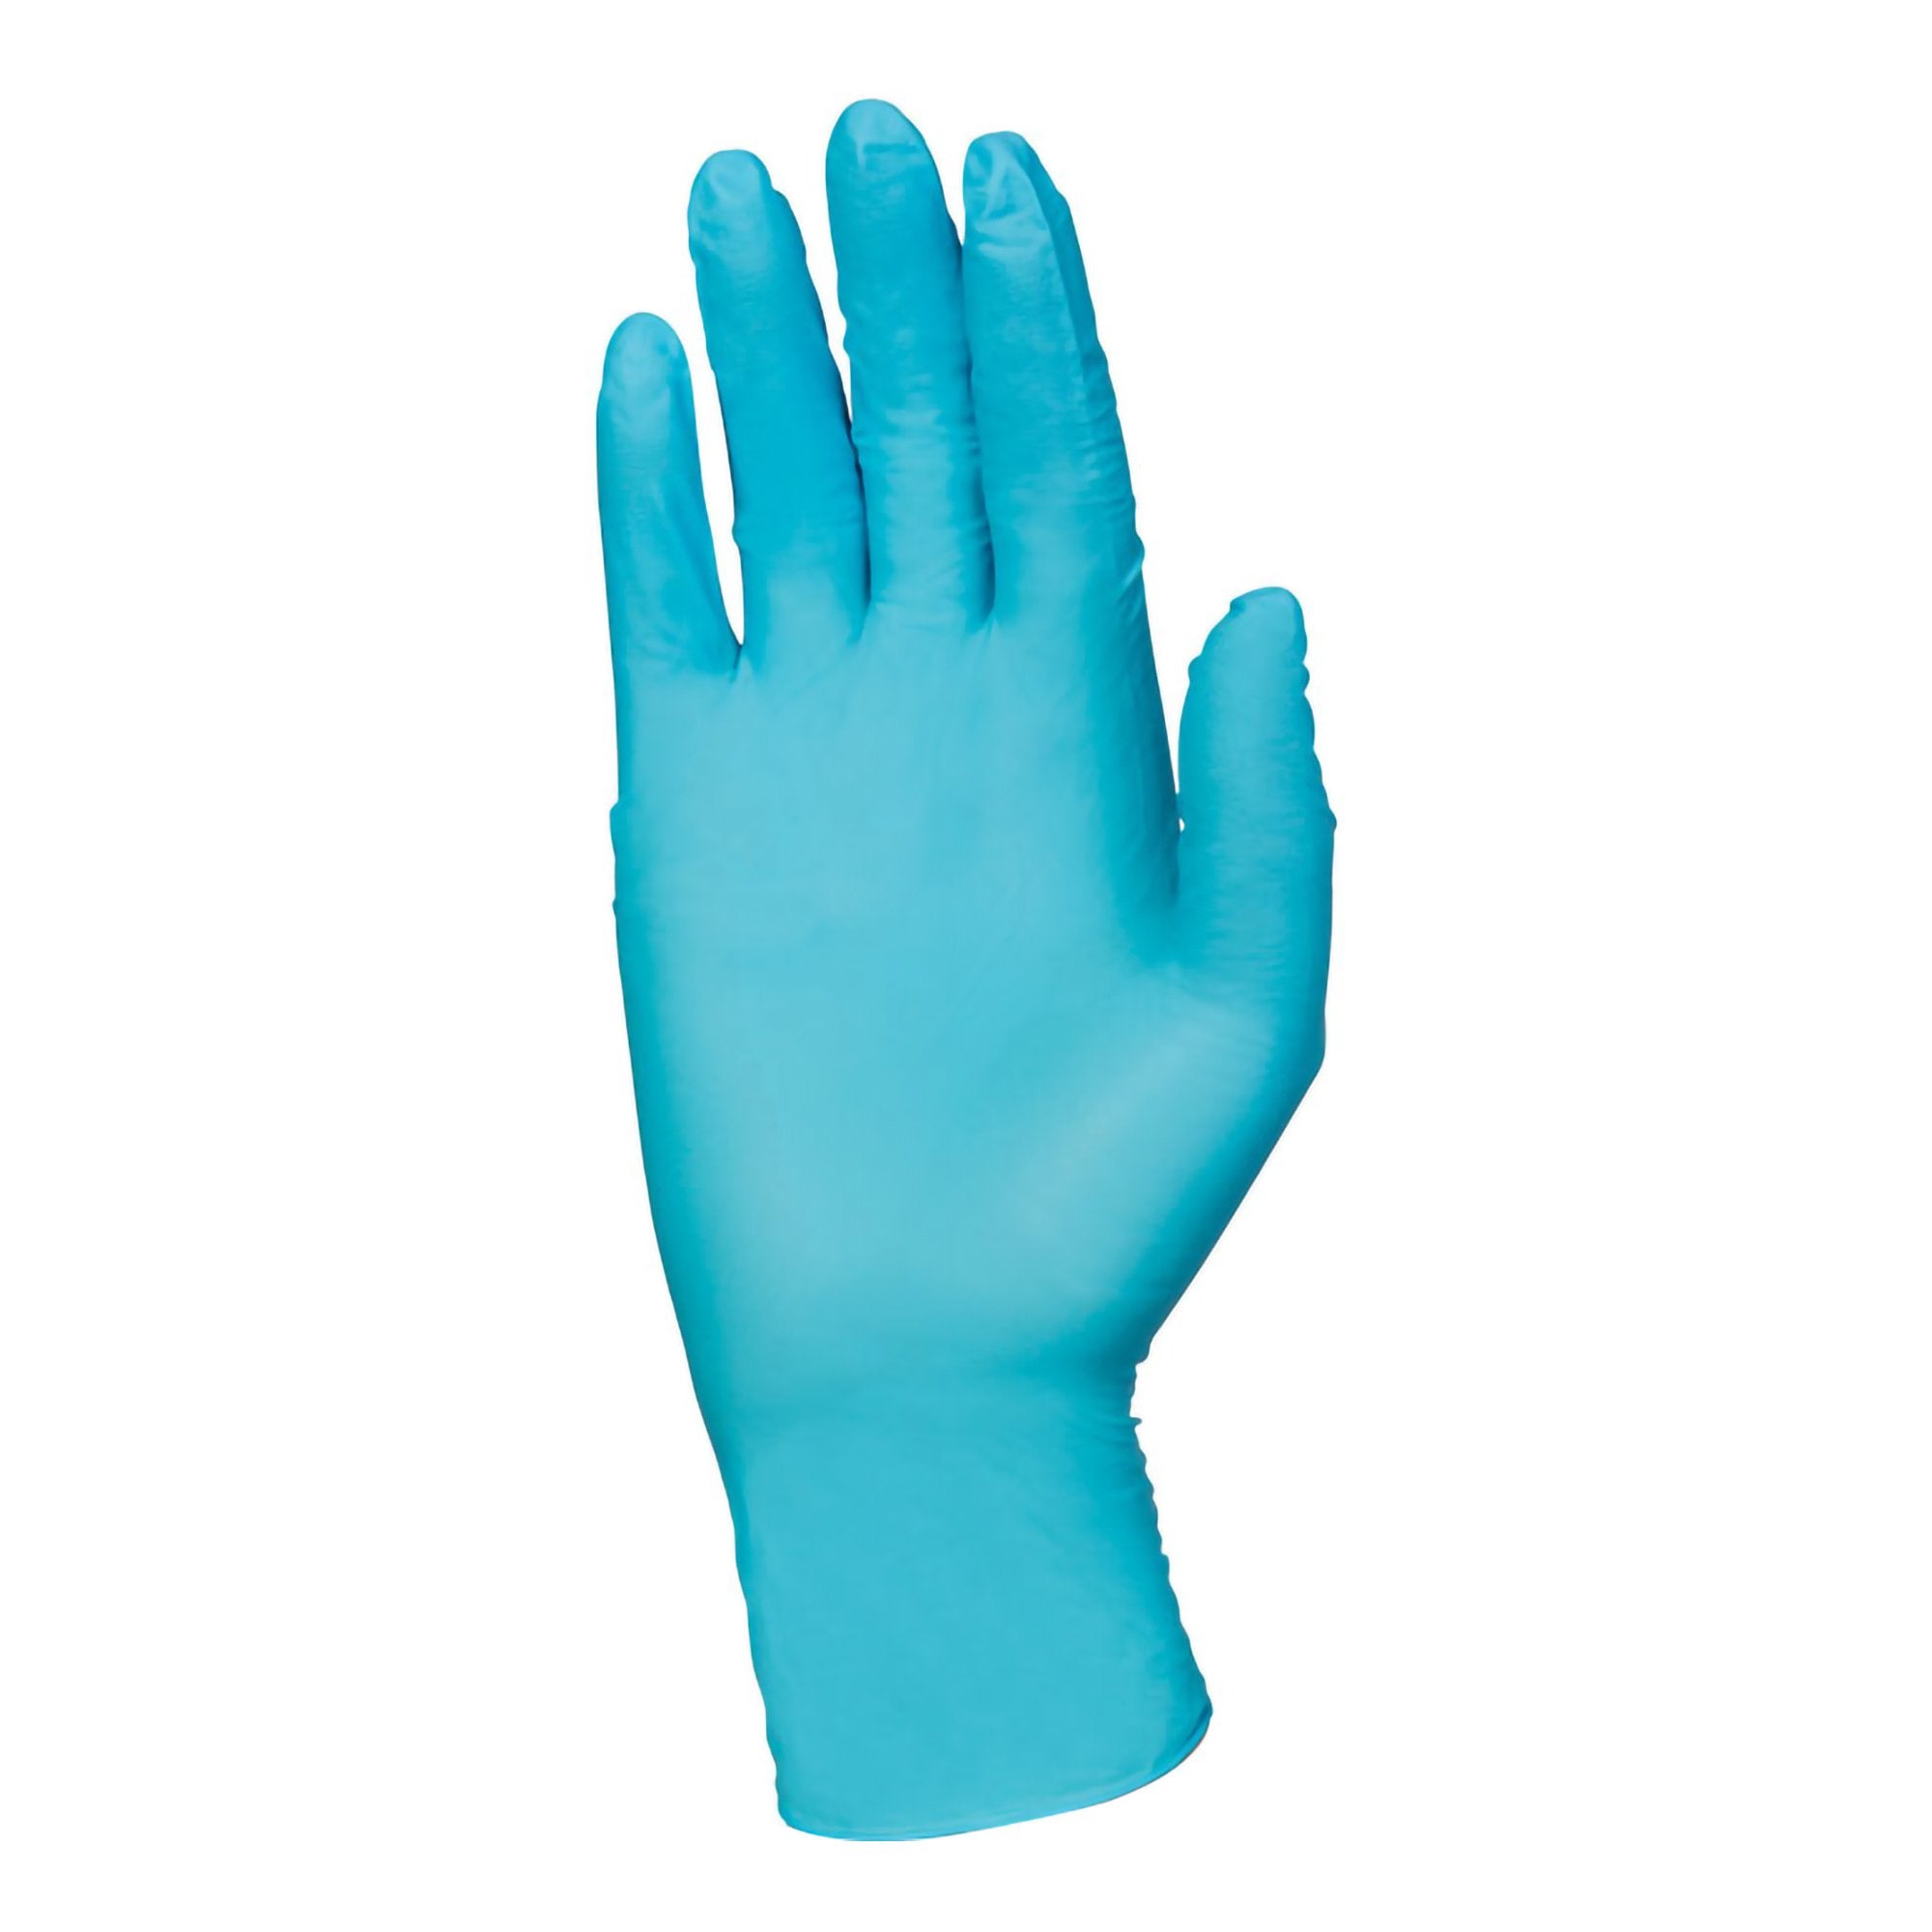 PremierPro? Plus Exam Glove, Extra Large, Blue